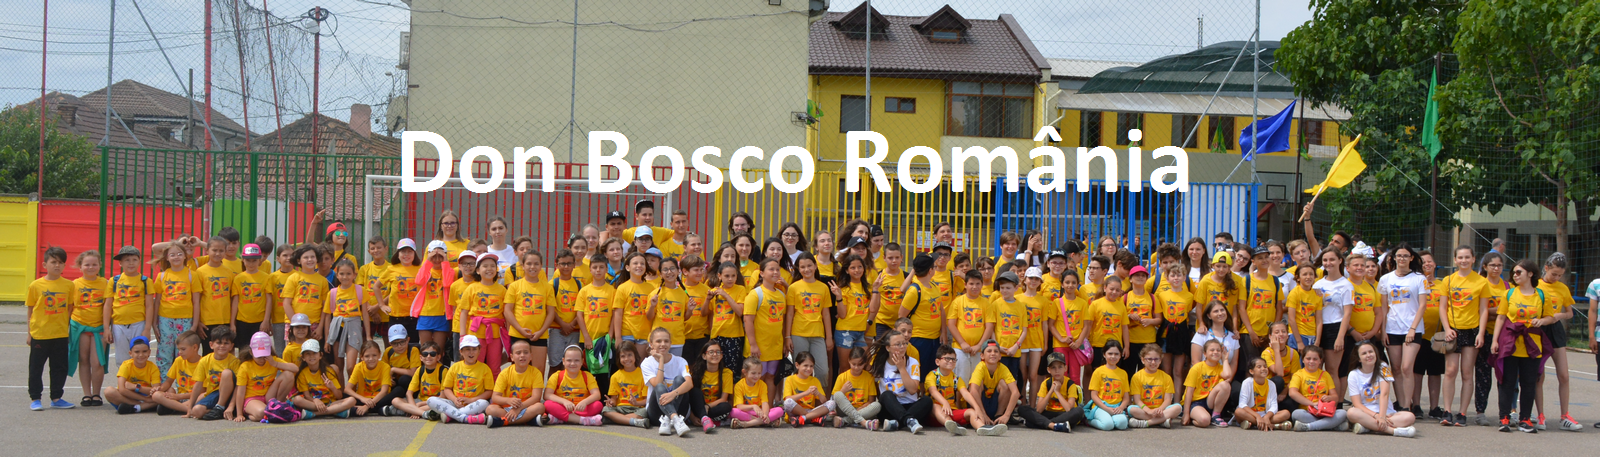 Centrul Don Bosco România